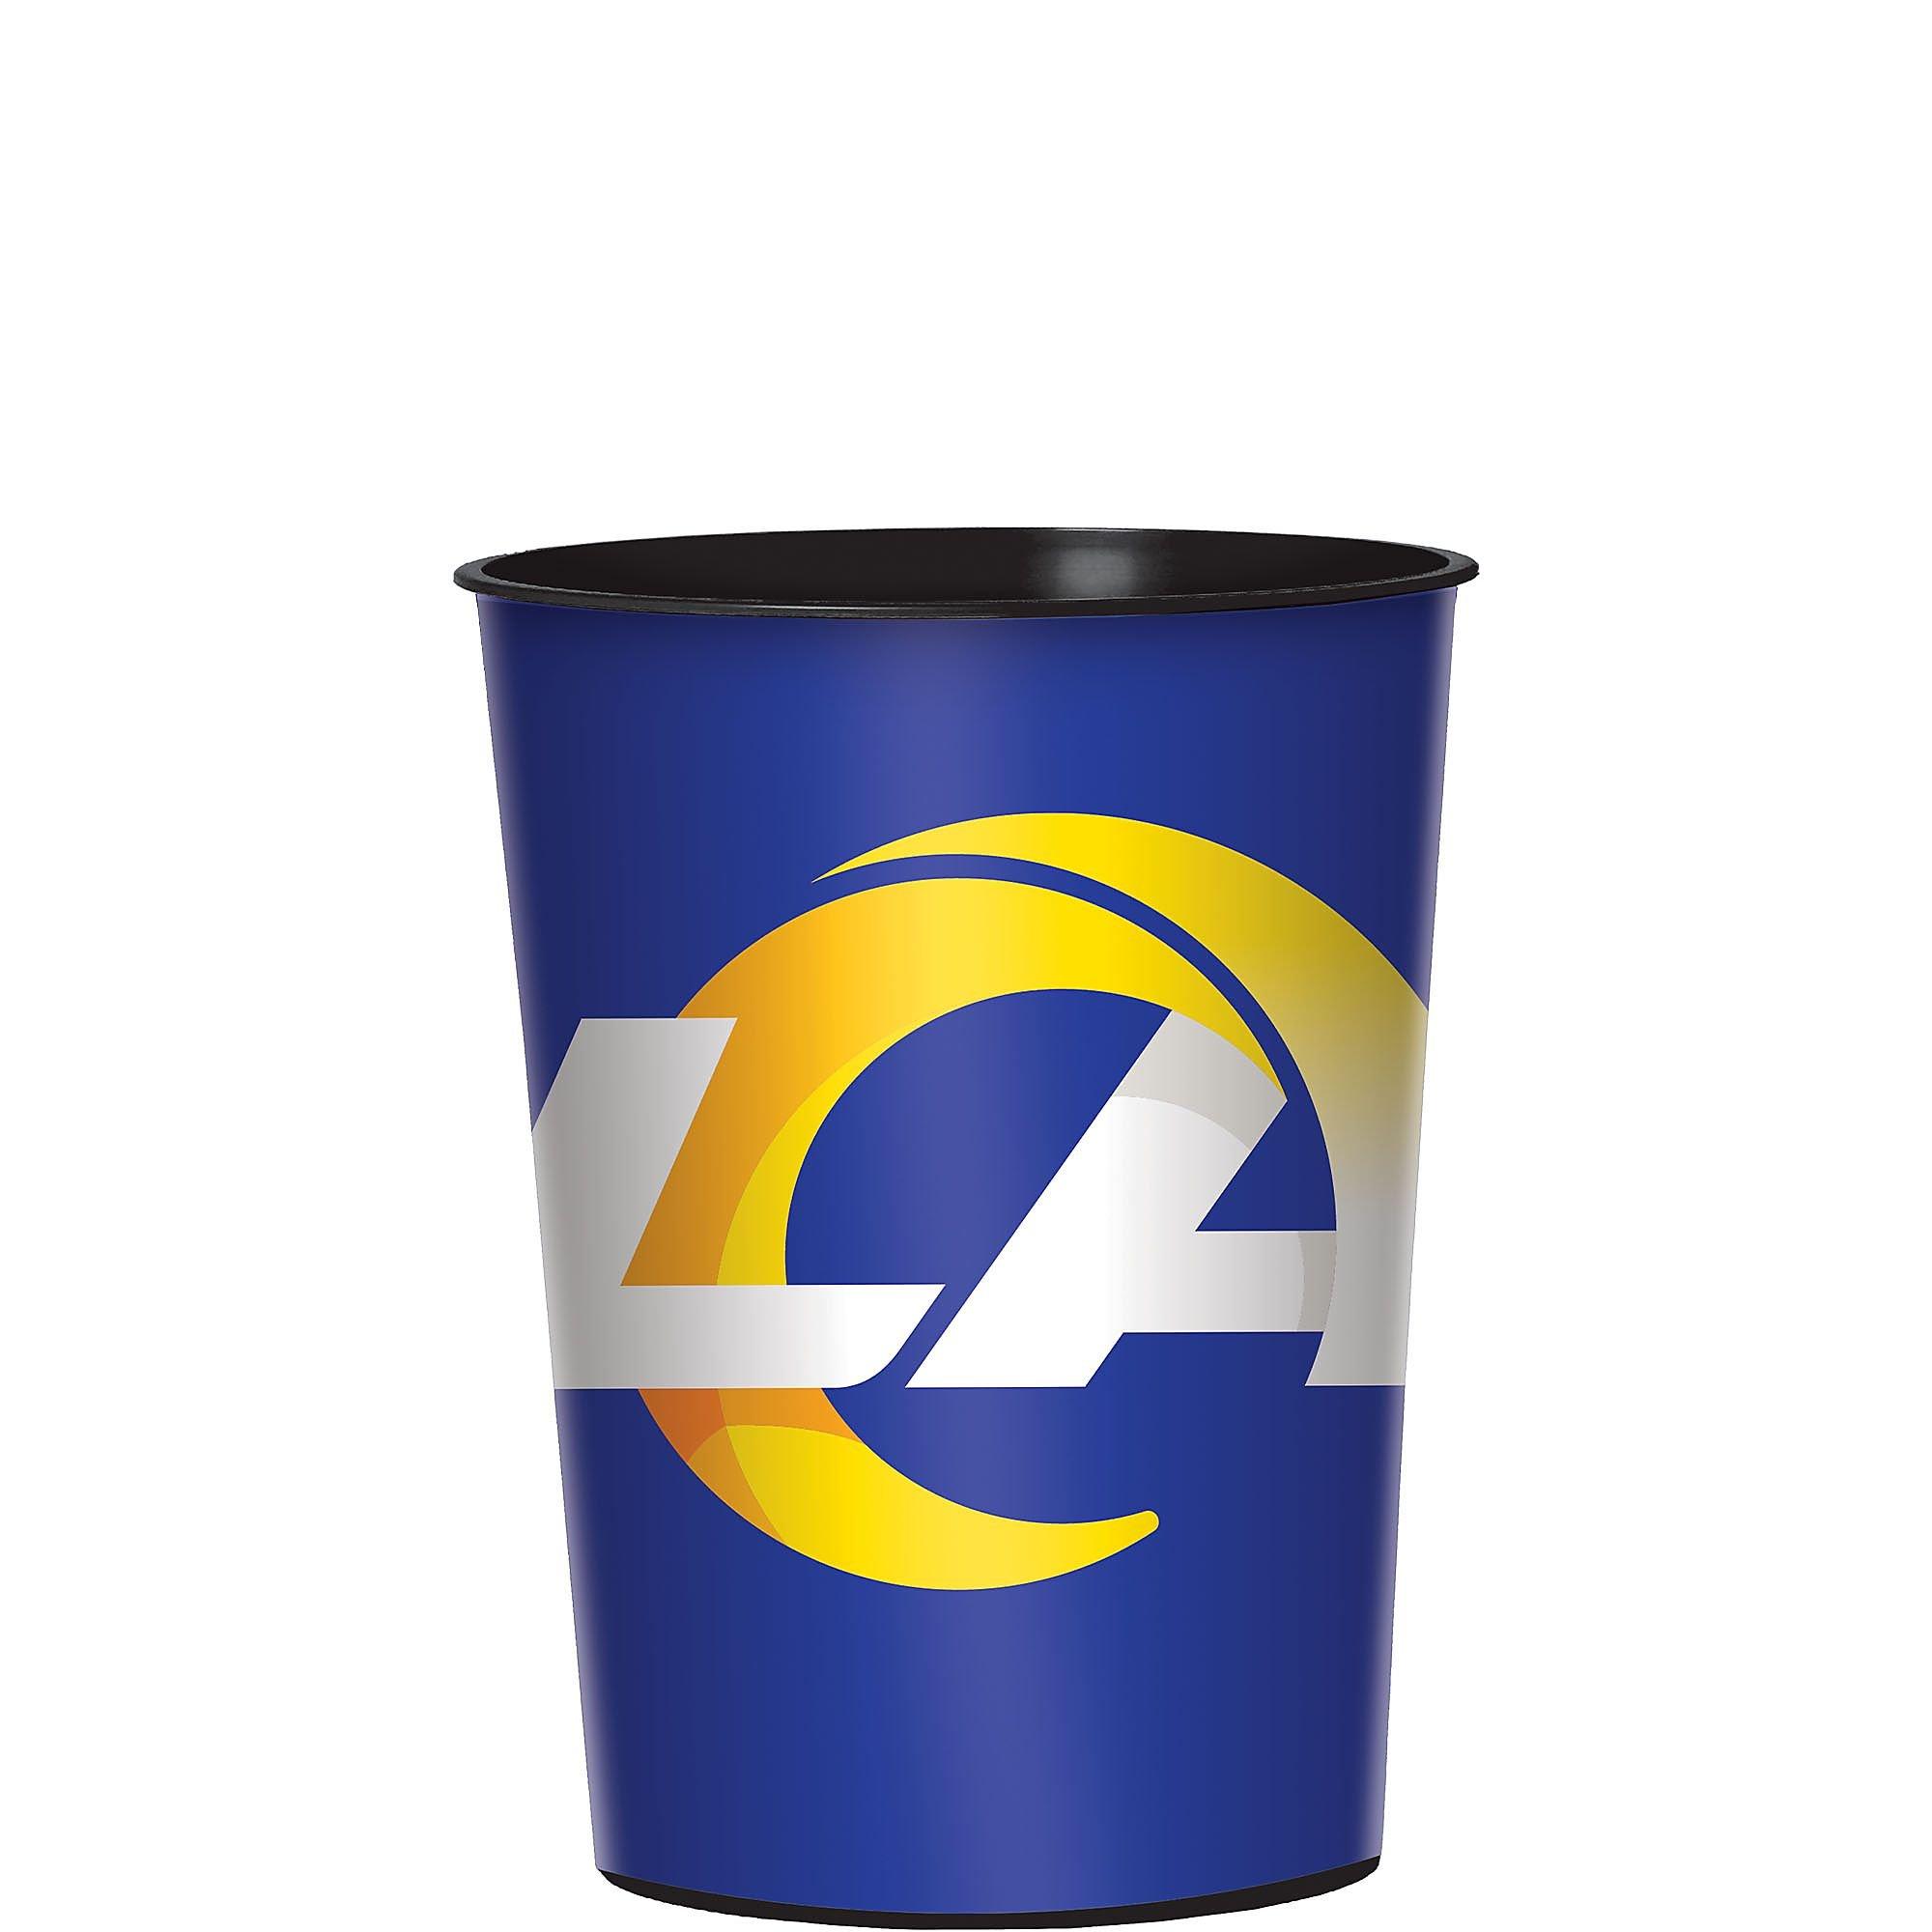 Blue and yellow again: LA Rams unveil logos, color scheme - The